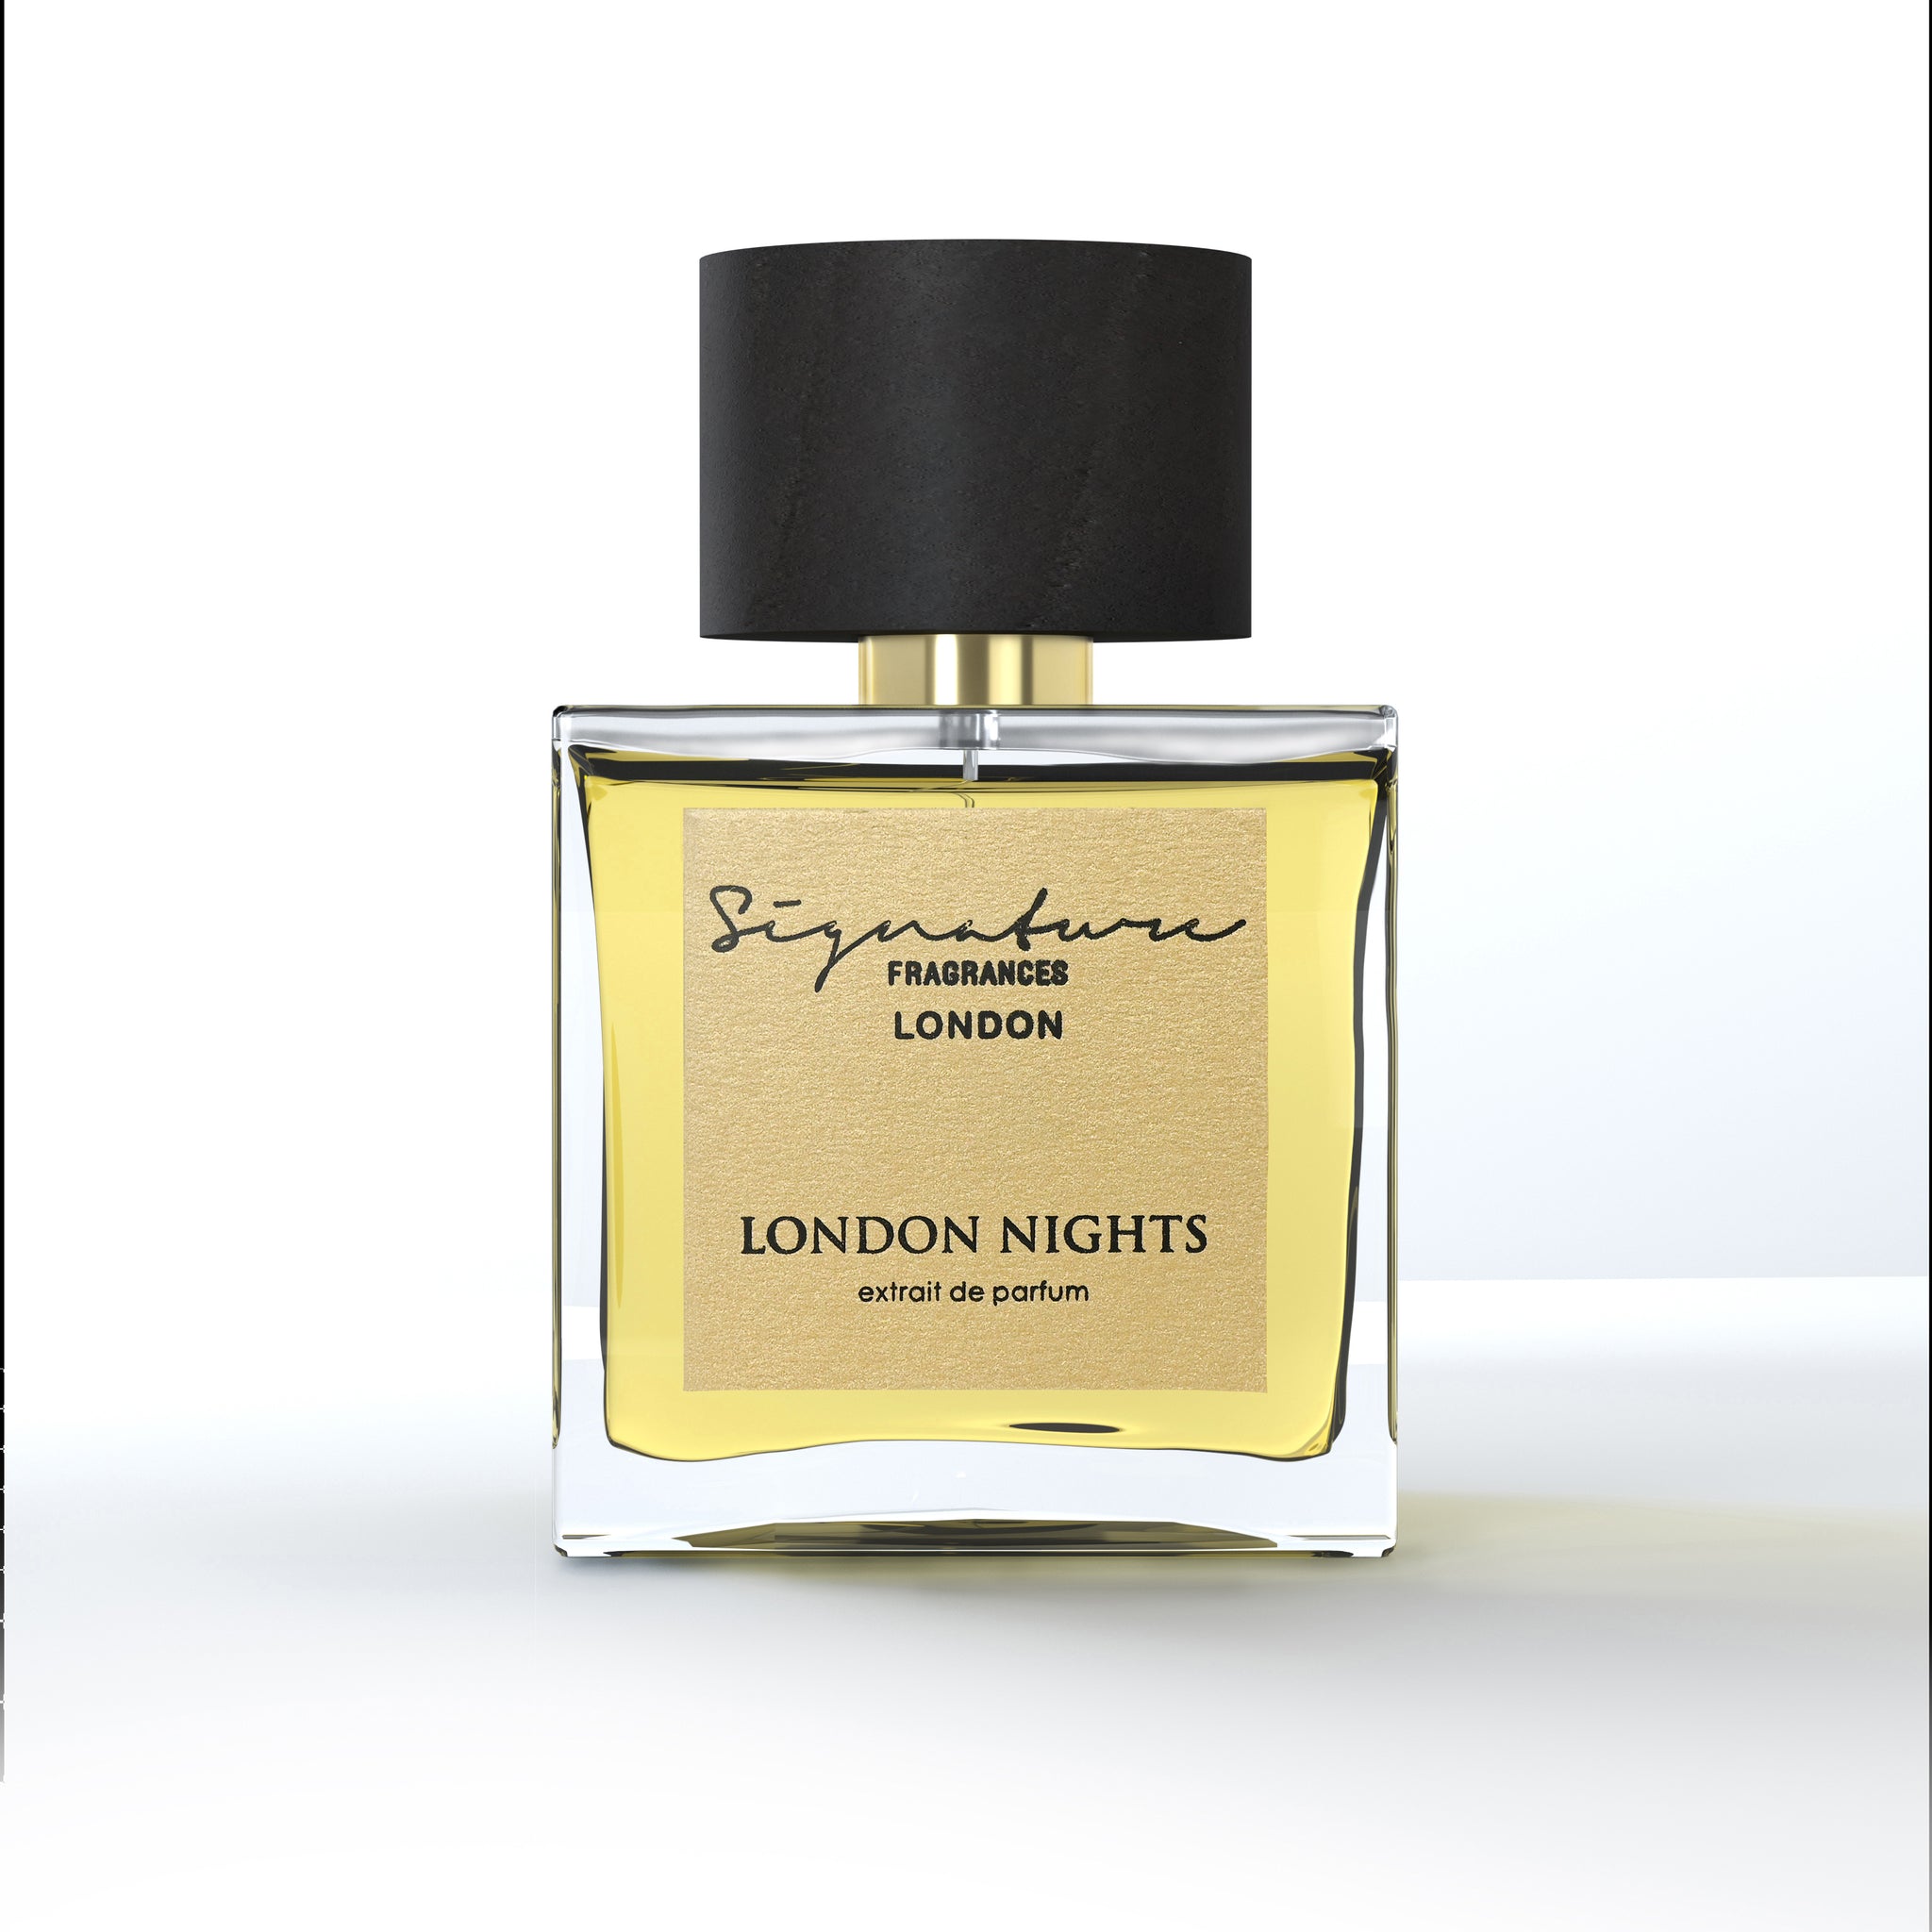 London Nights - Signature Fragrances London